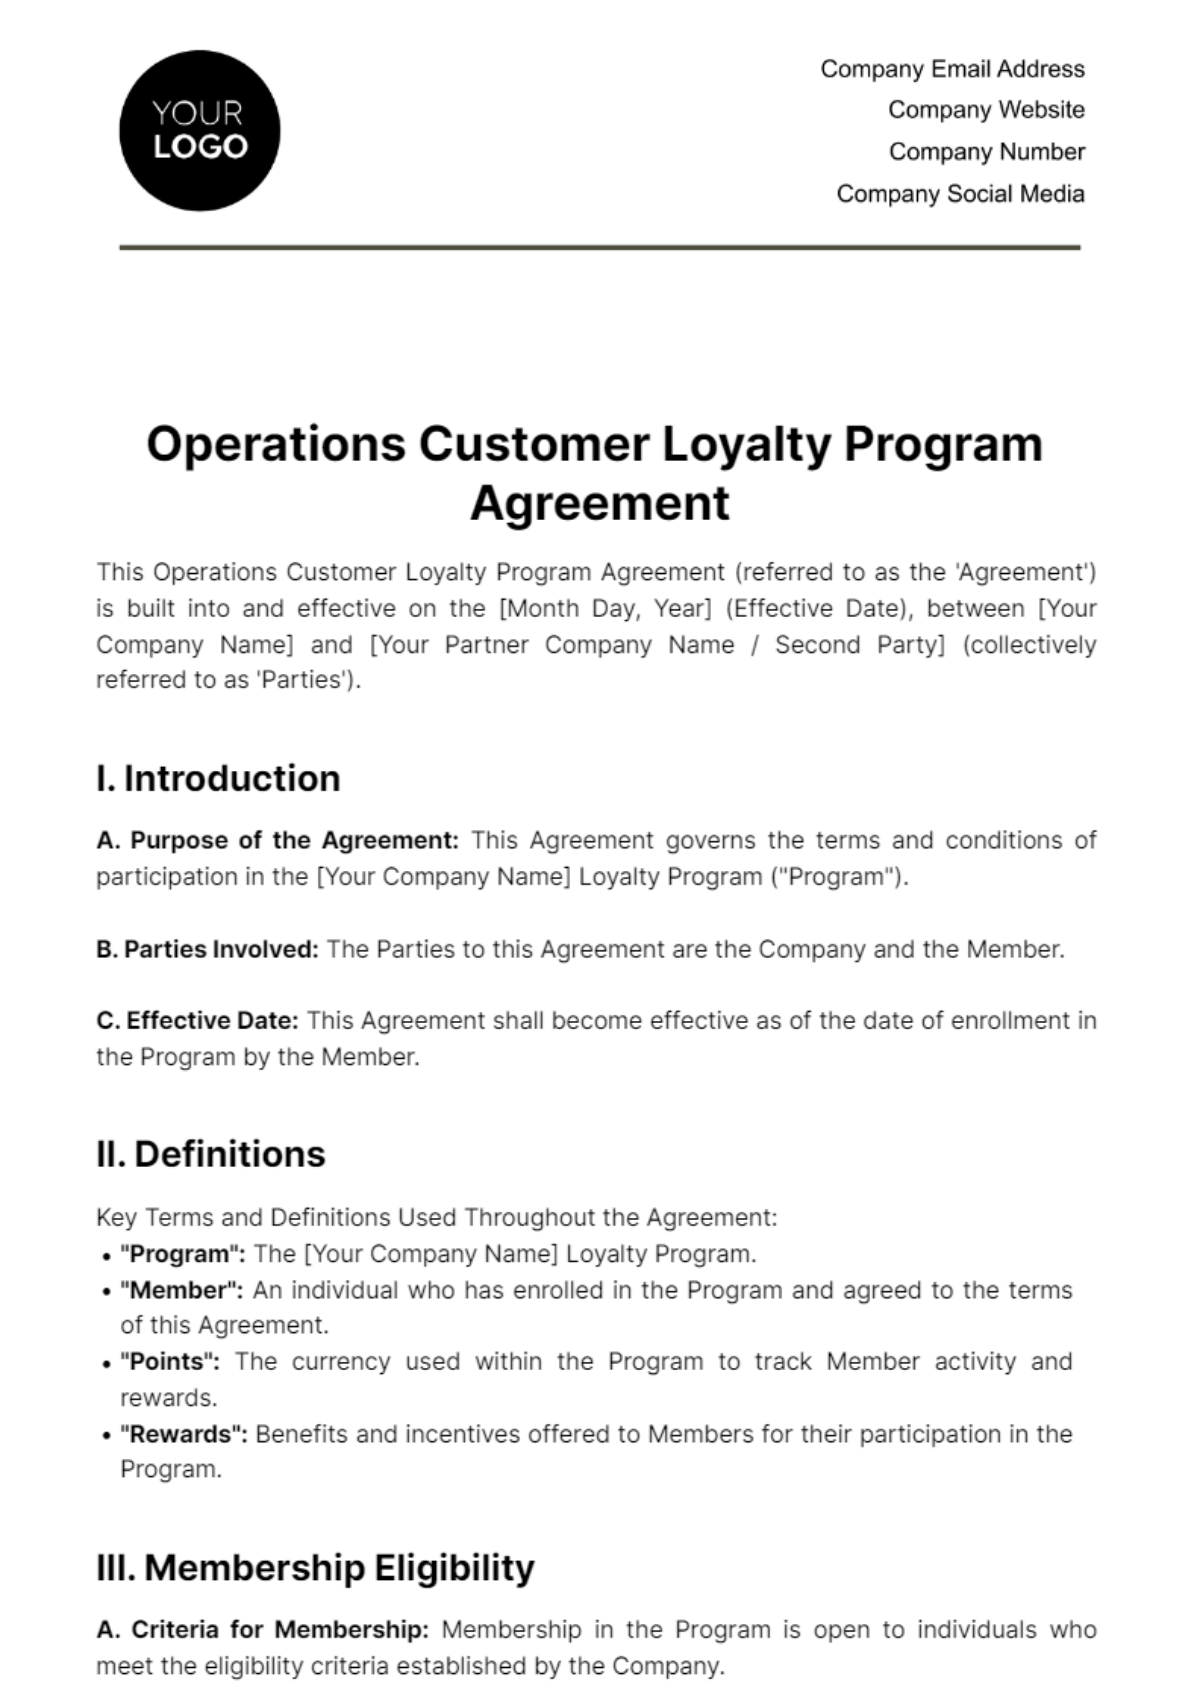 Operations Customer Loyalty Program Agreement Template